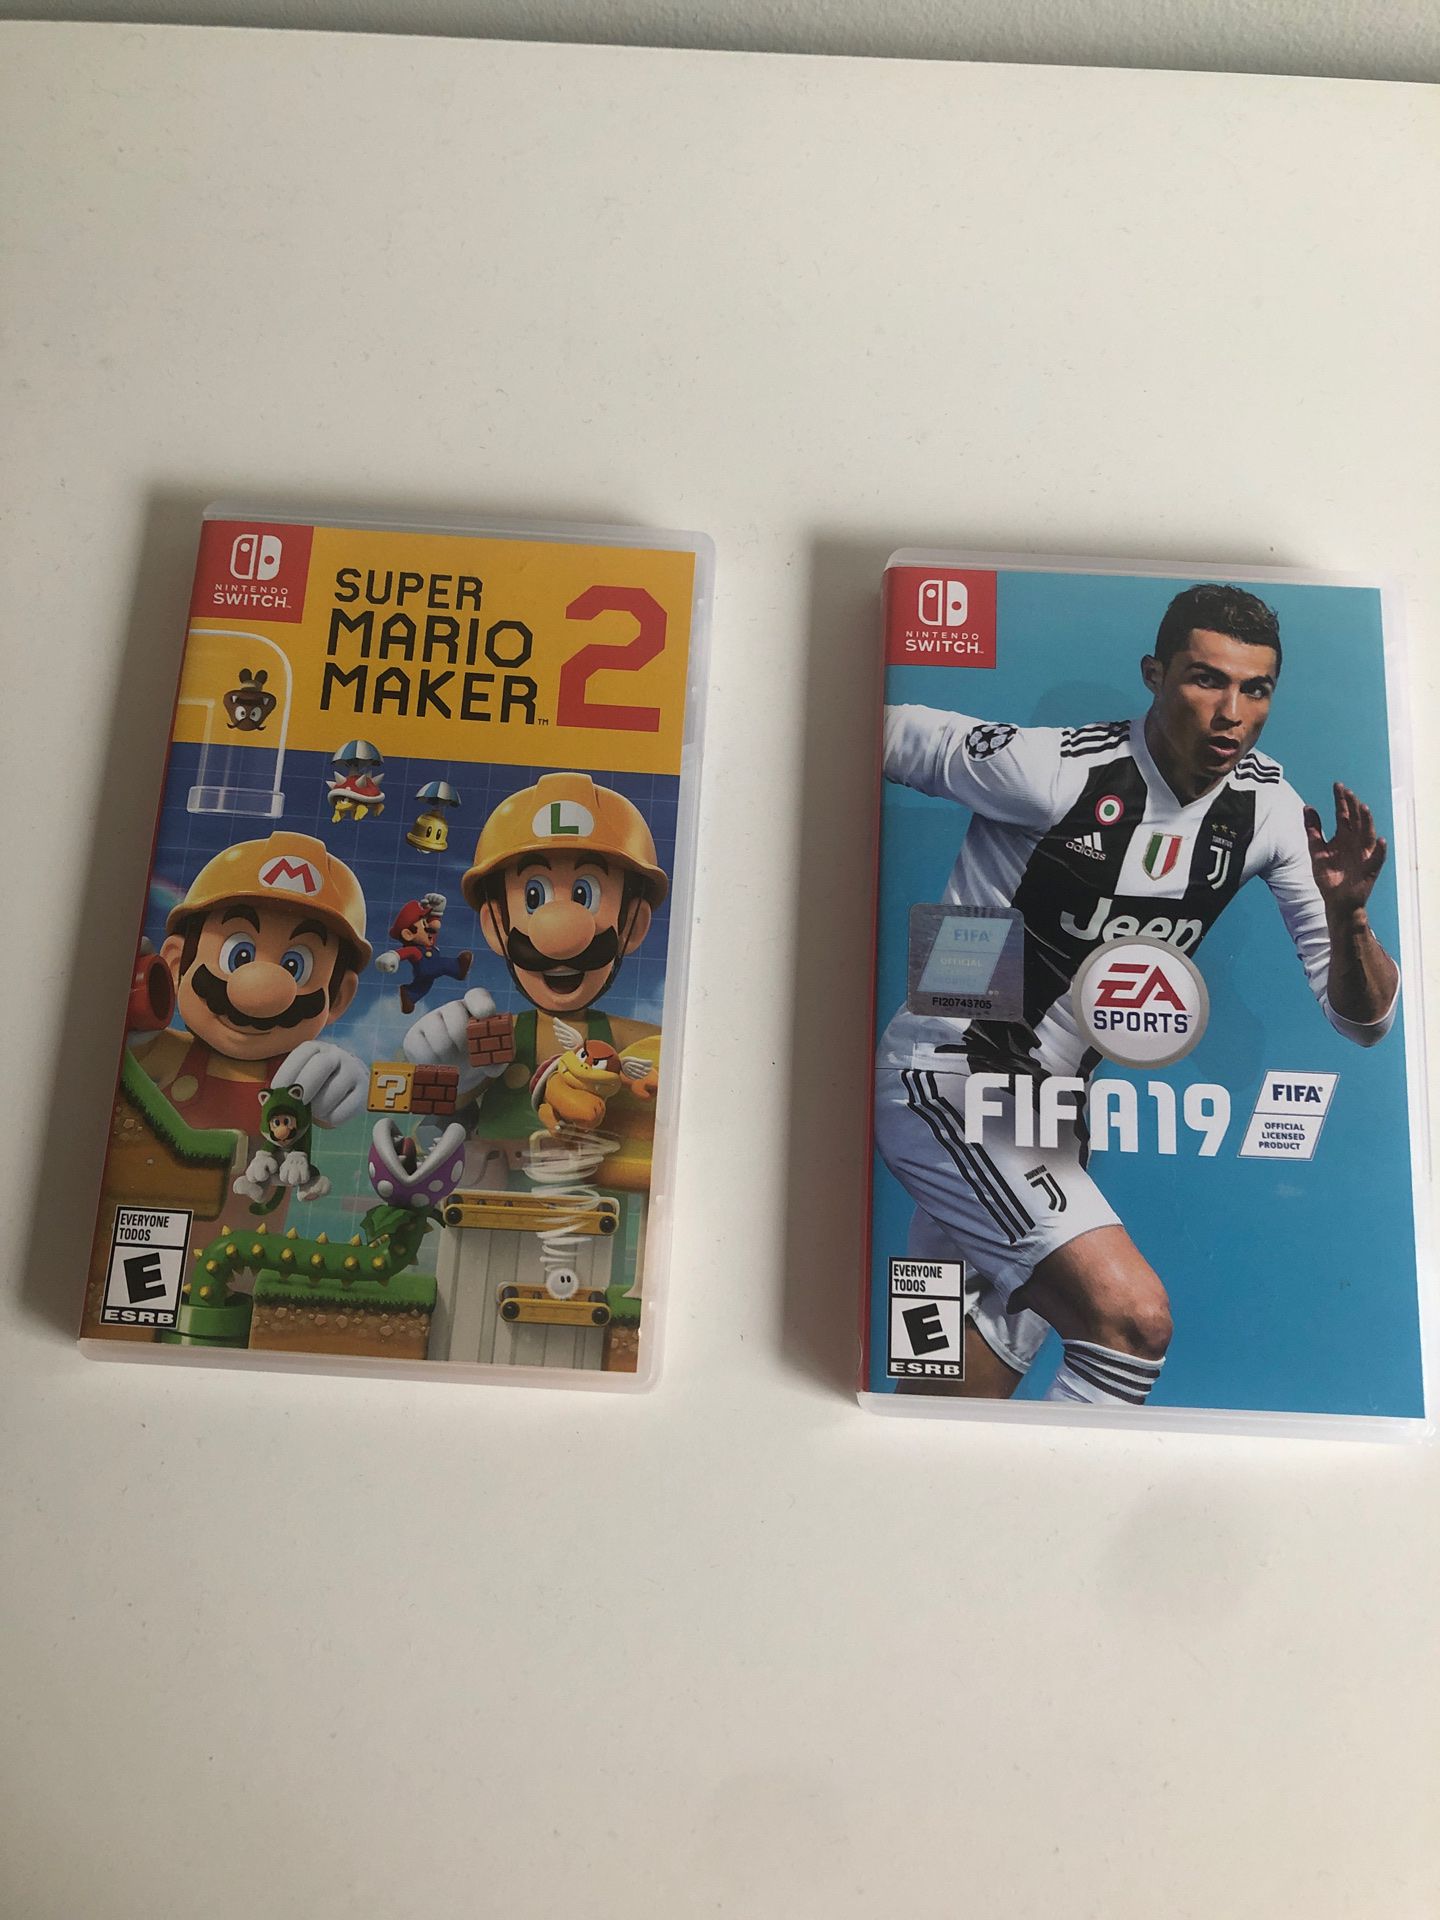 Super Mario Maker 2 and FIFA 19